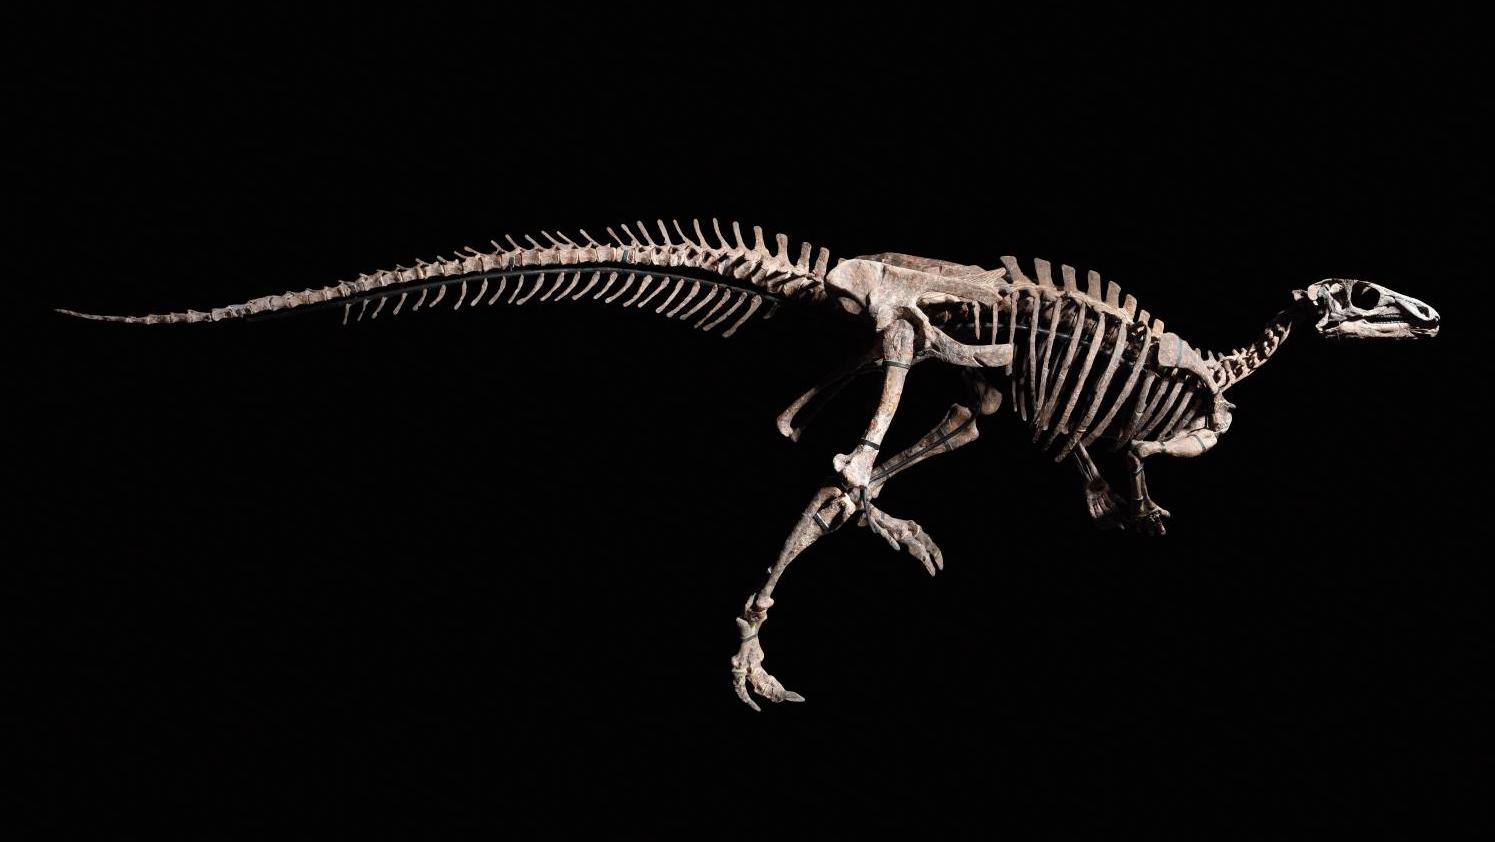 Zephyr, Iguanodontia, Camptosauridae, Morrison formation, Tithonian, Late Jurassic,... Zephyr the Roaming Dinosaur